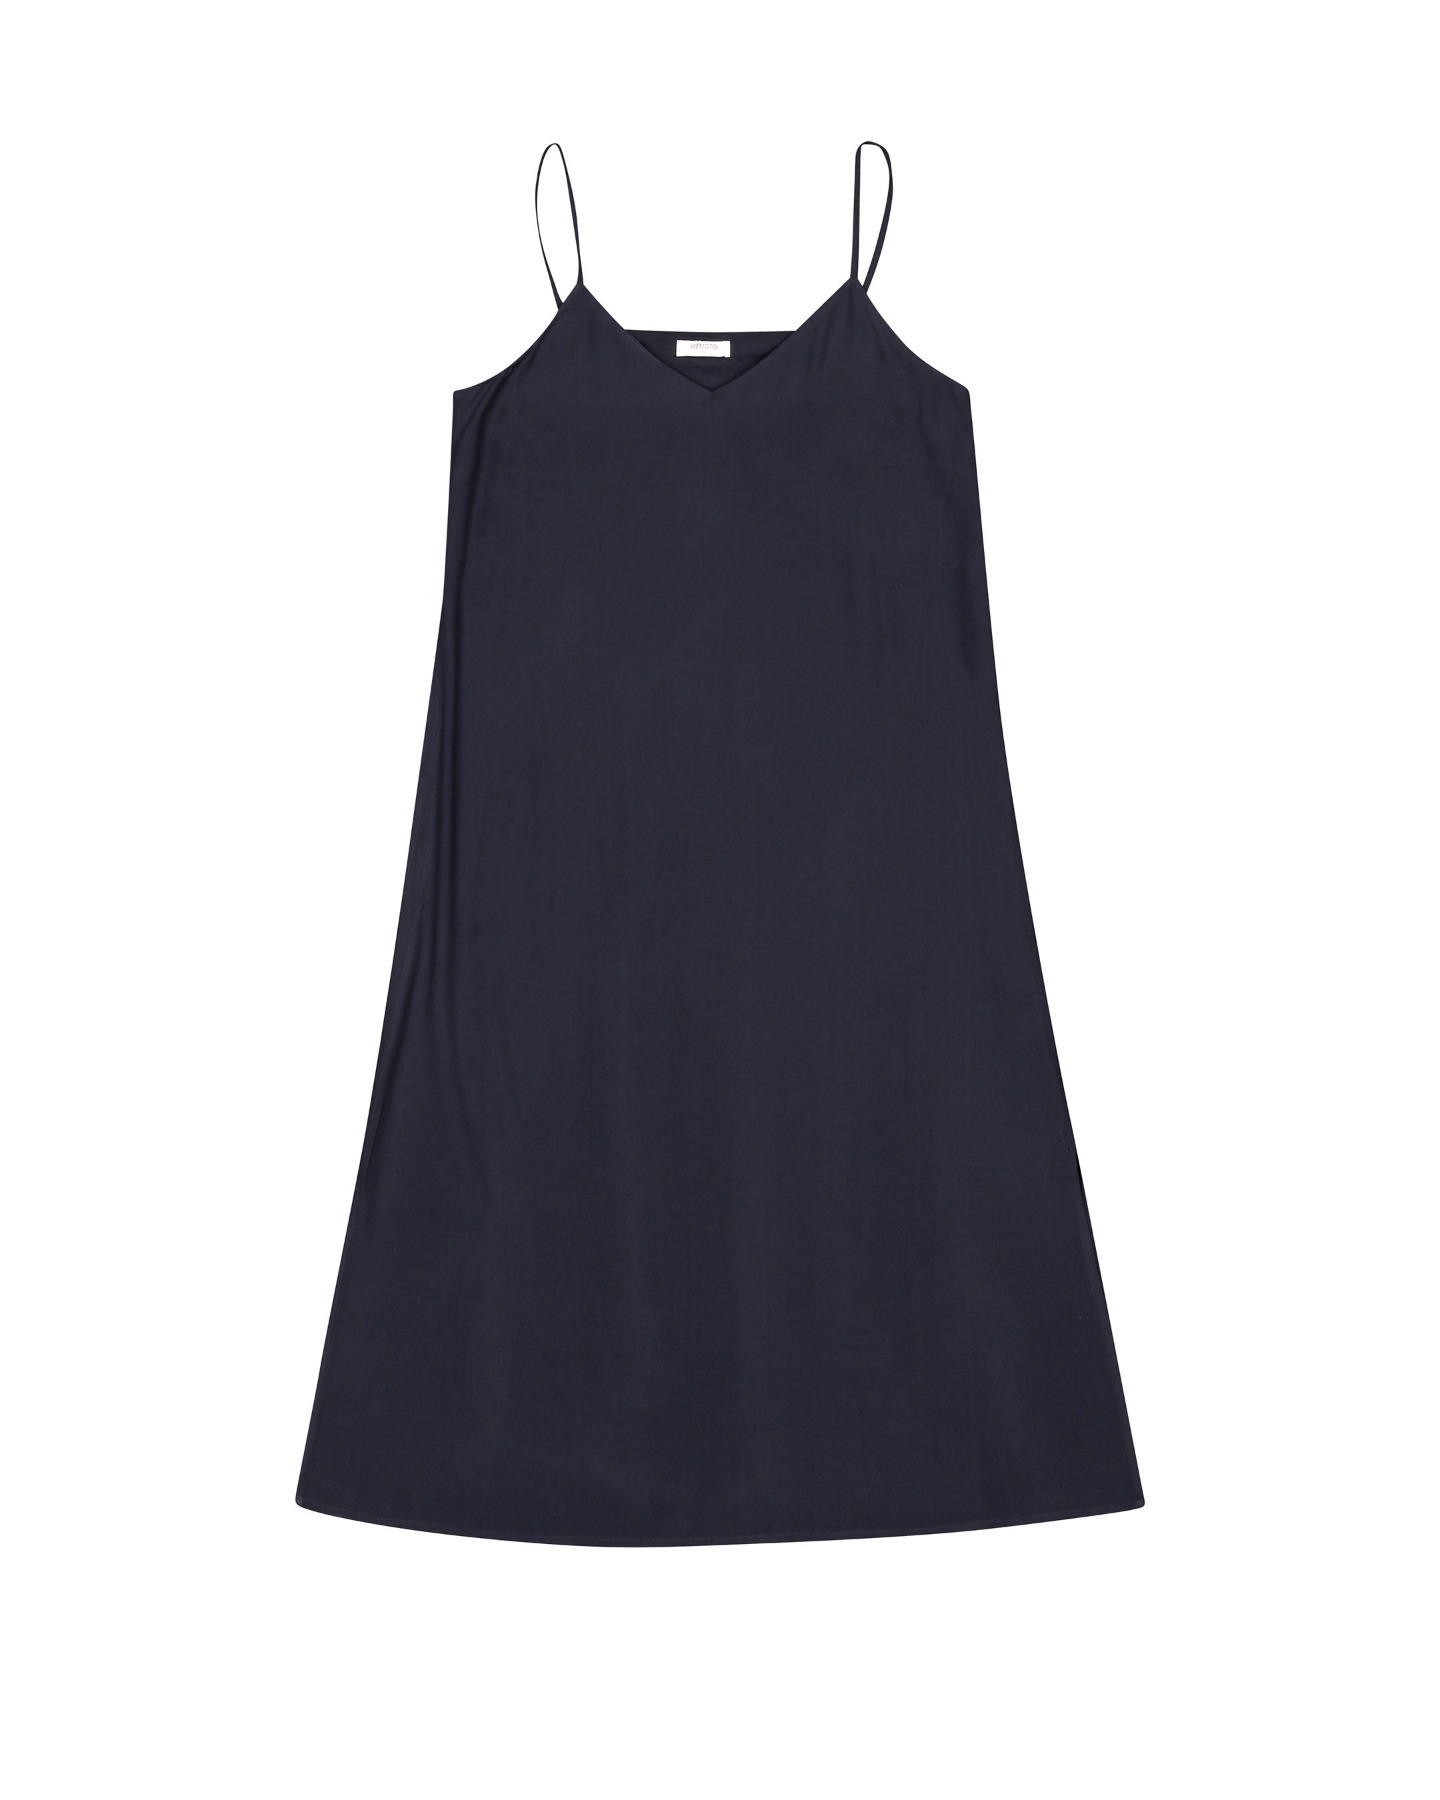 WEMOTO - Lilou Dress - Navy Blue 4